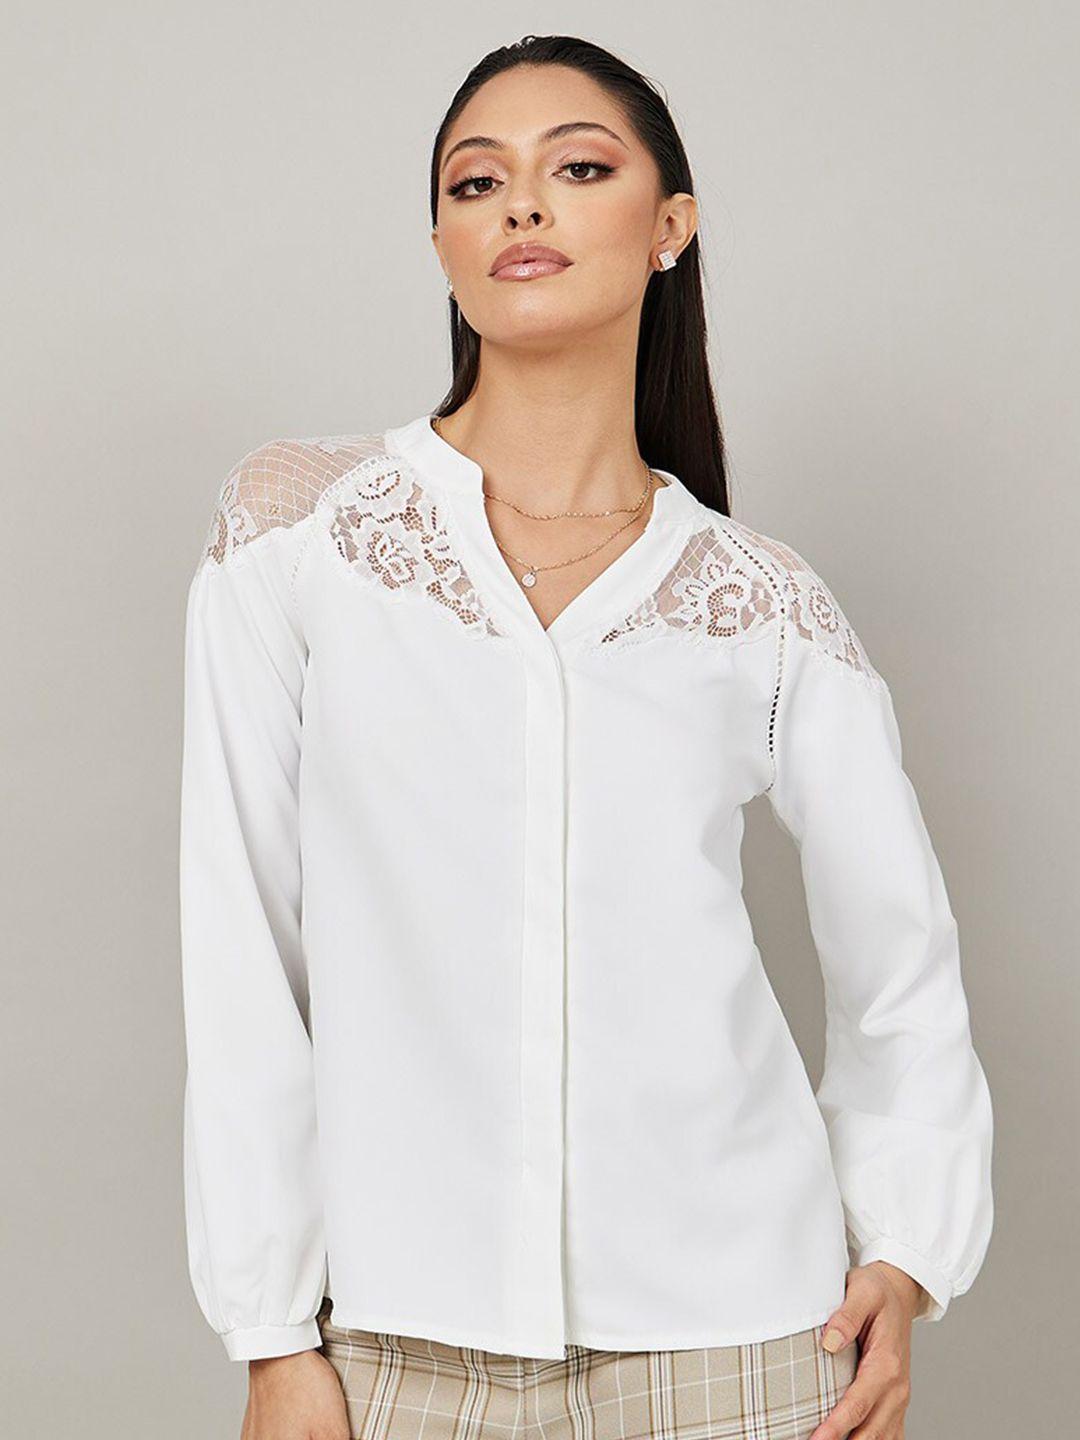 styli white mandarin collar shirt style top